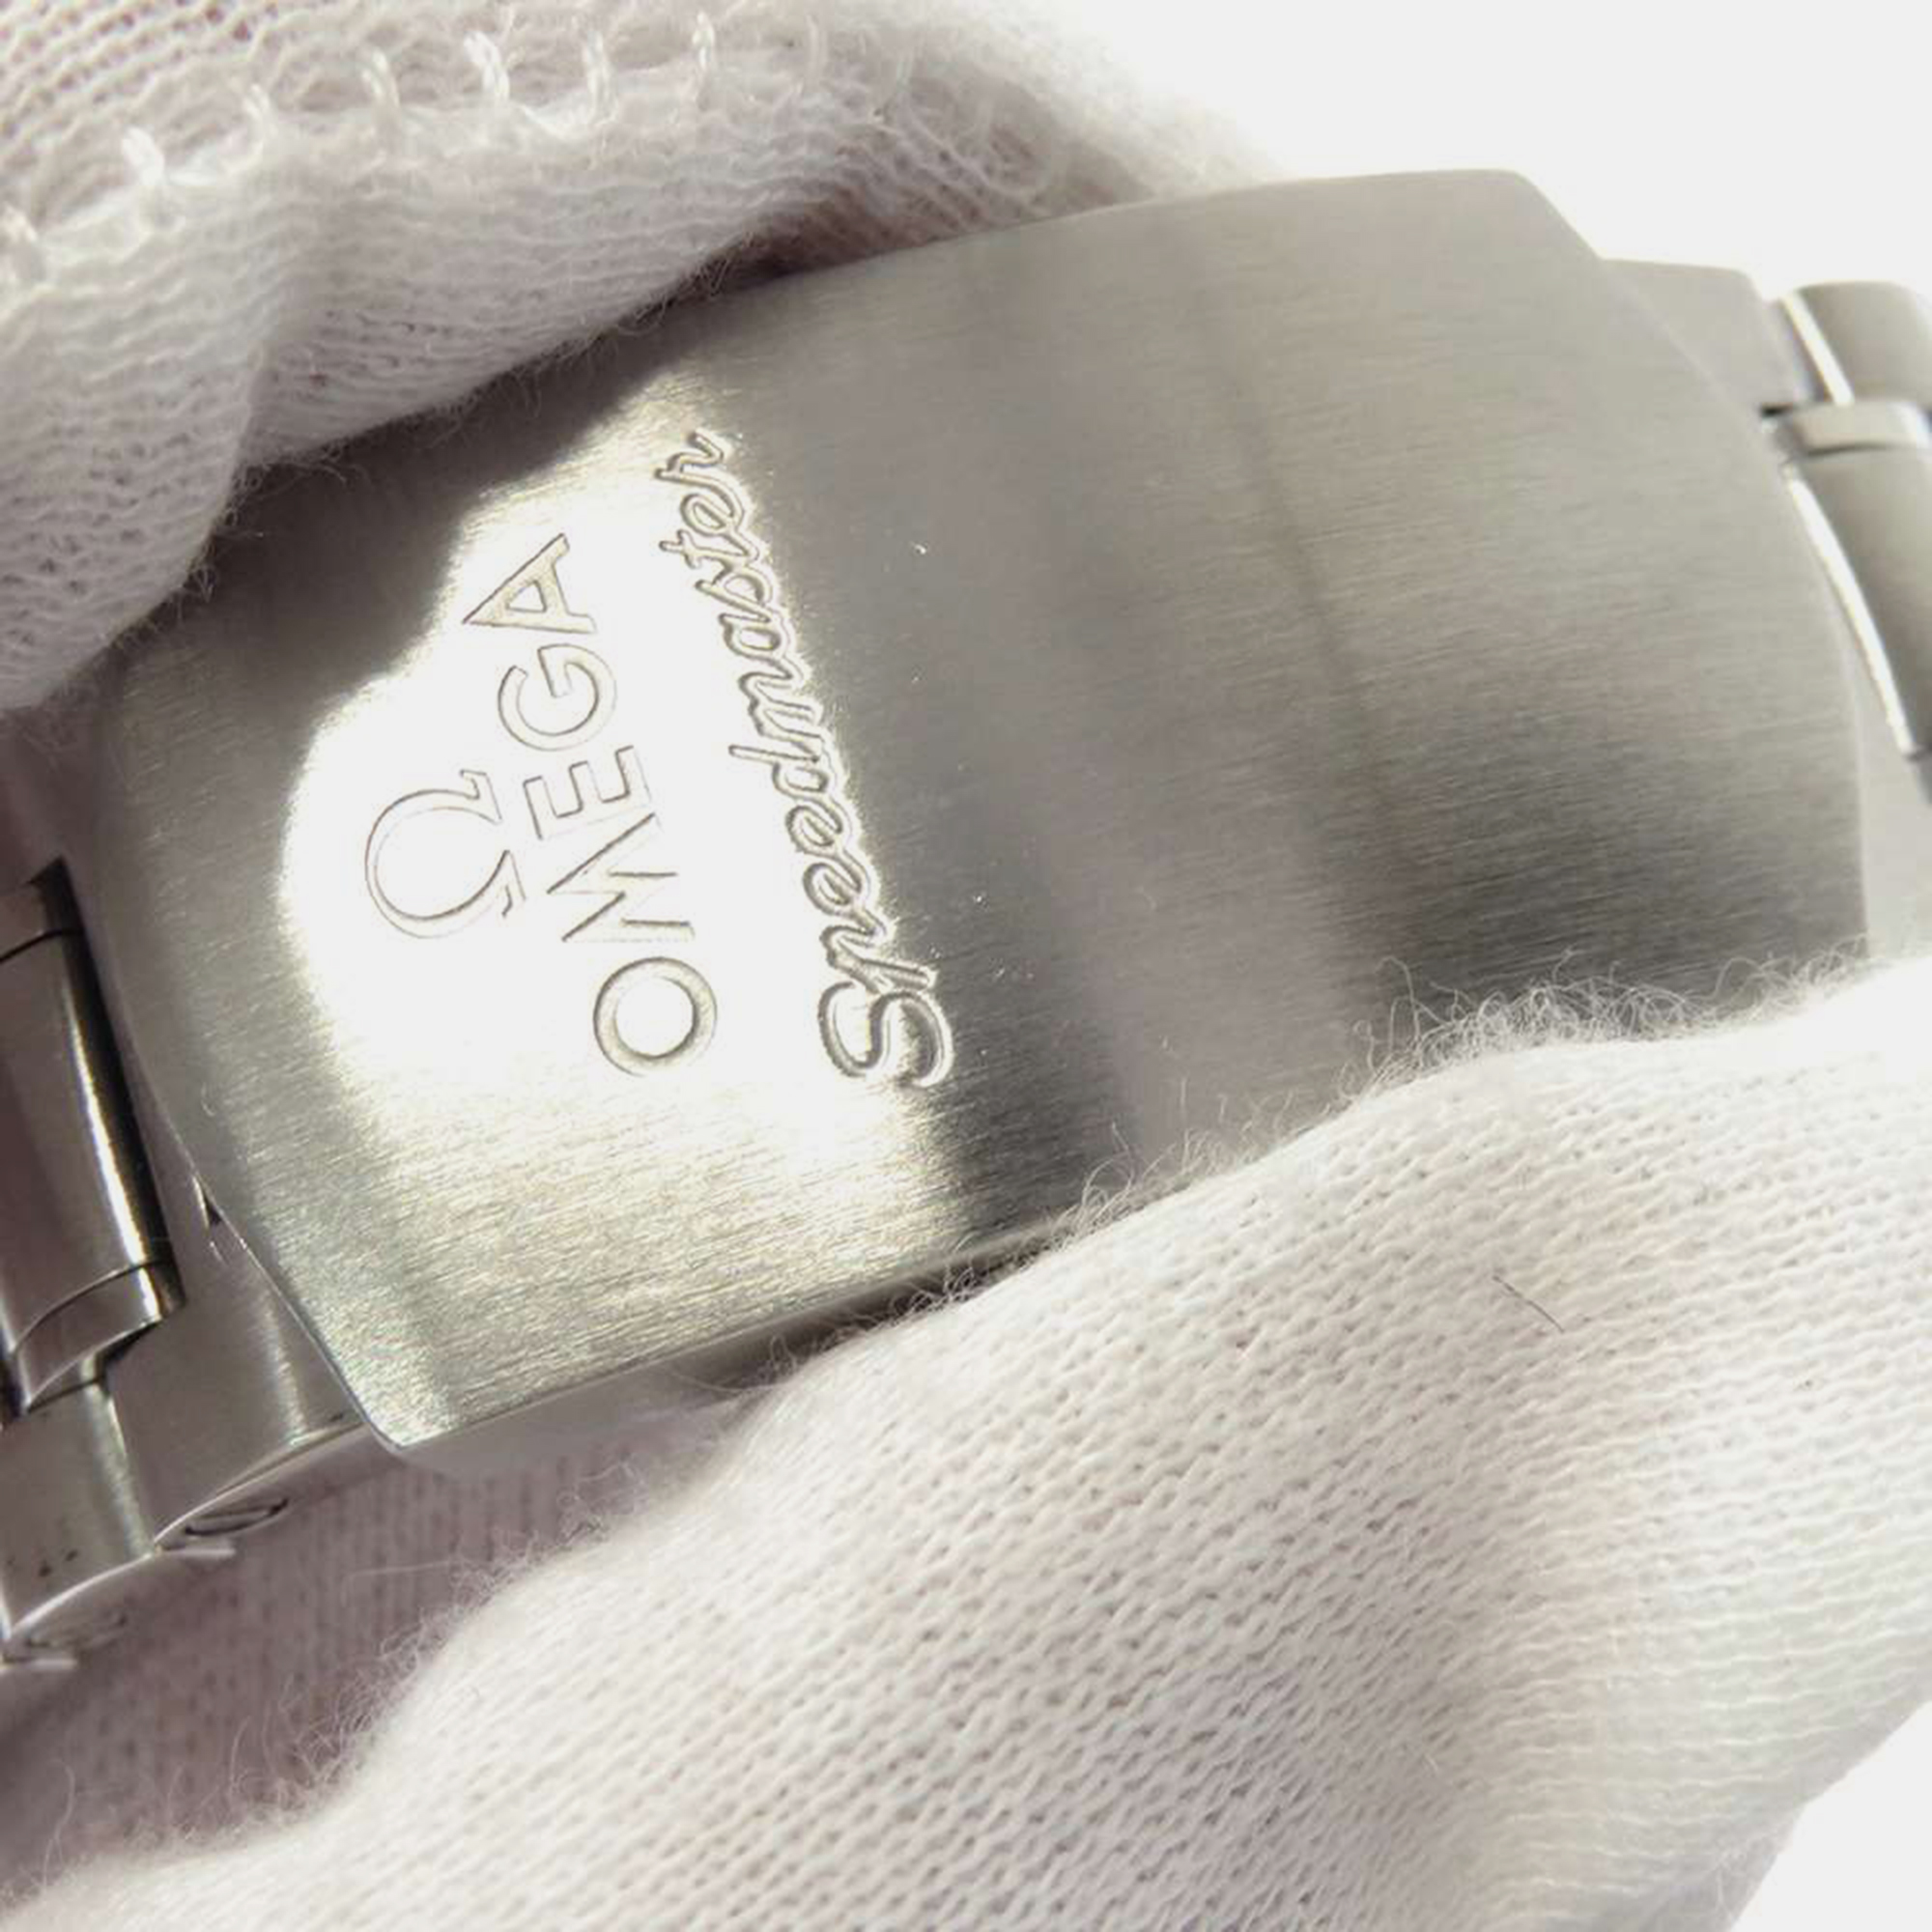 Omega Grey Stainless Steel Speedmaster 326.30.40.50.06.001 Automatic Men's Wristwatch 40 Mm